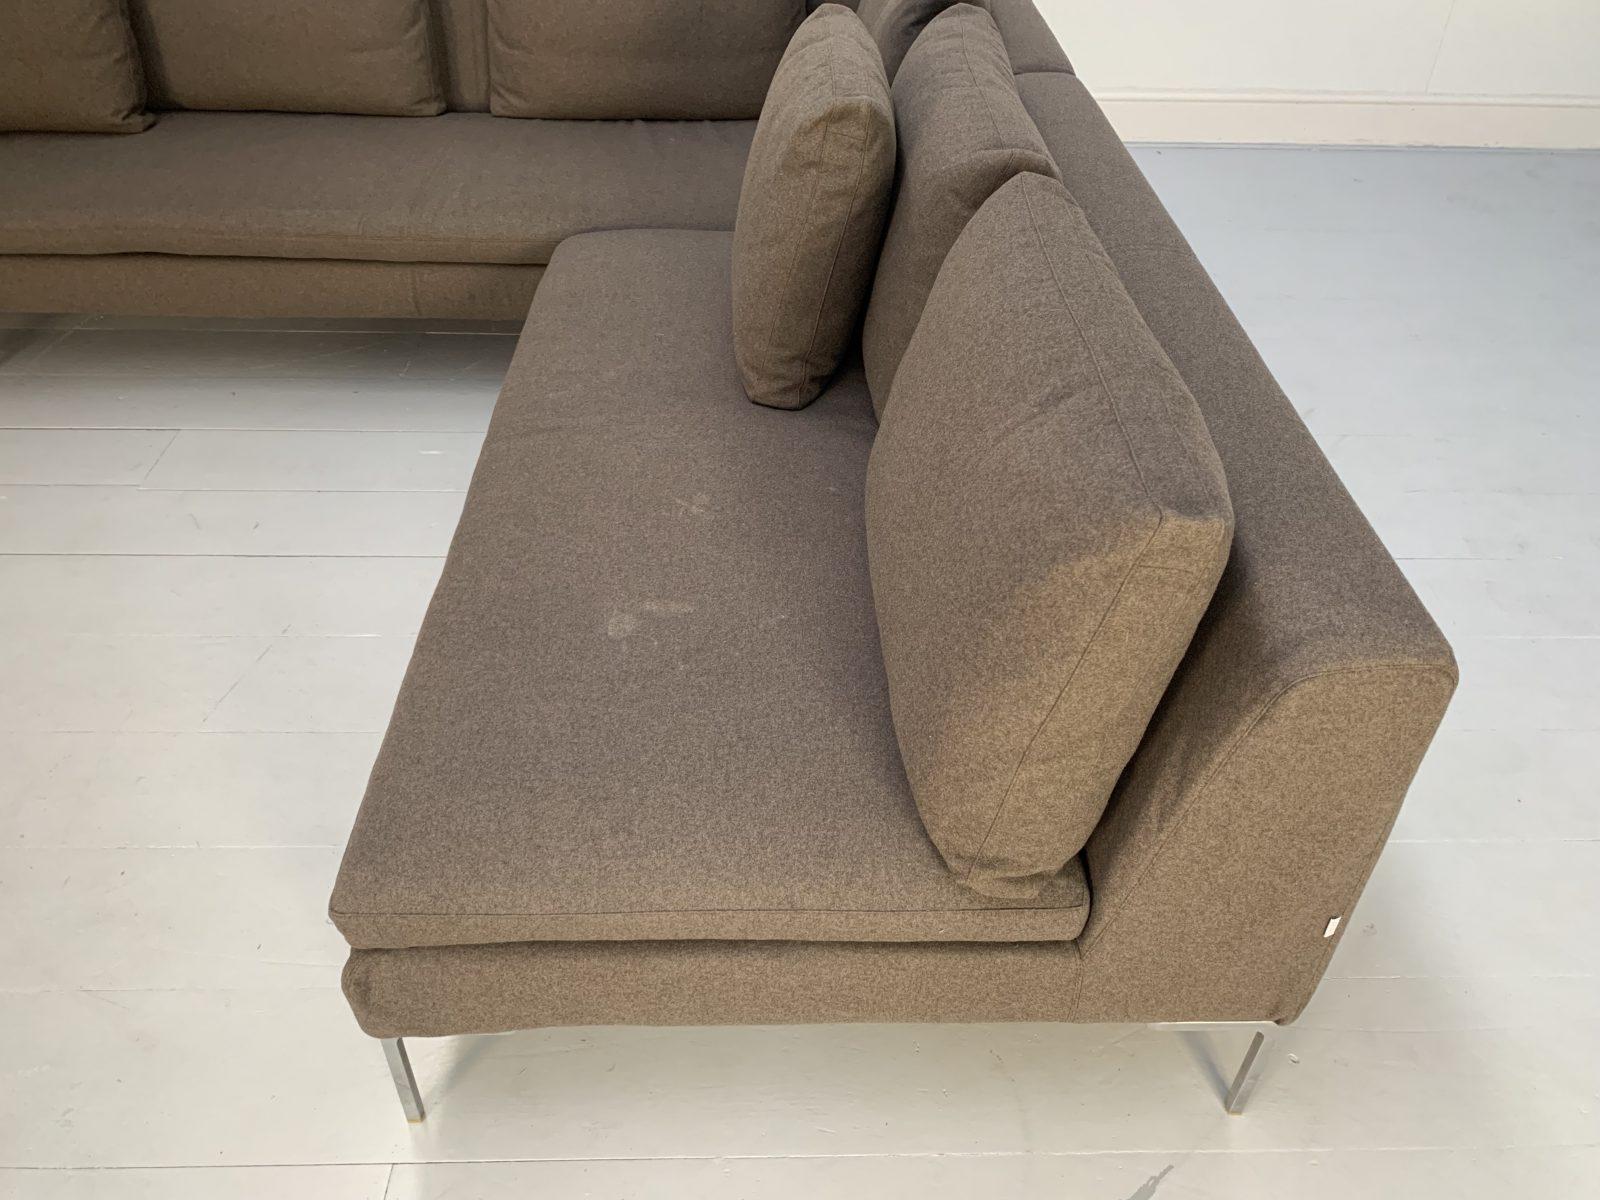 B&B Italia “Charles” L-Shape Sectional Sofa in Beige “Serra” Cashmere For Sale 6